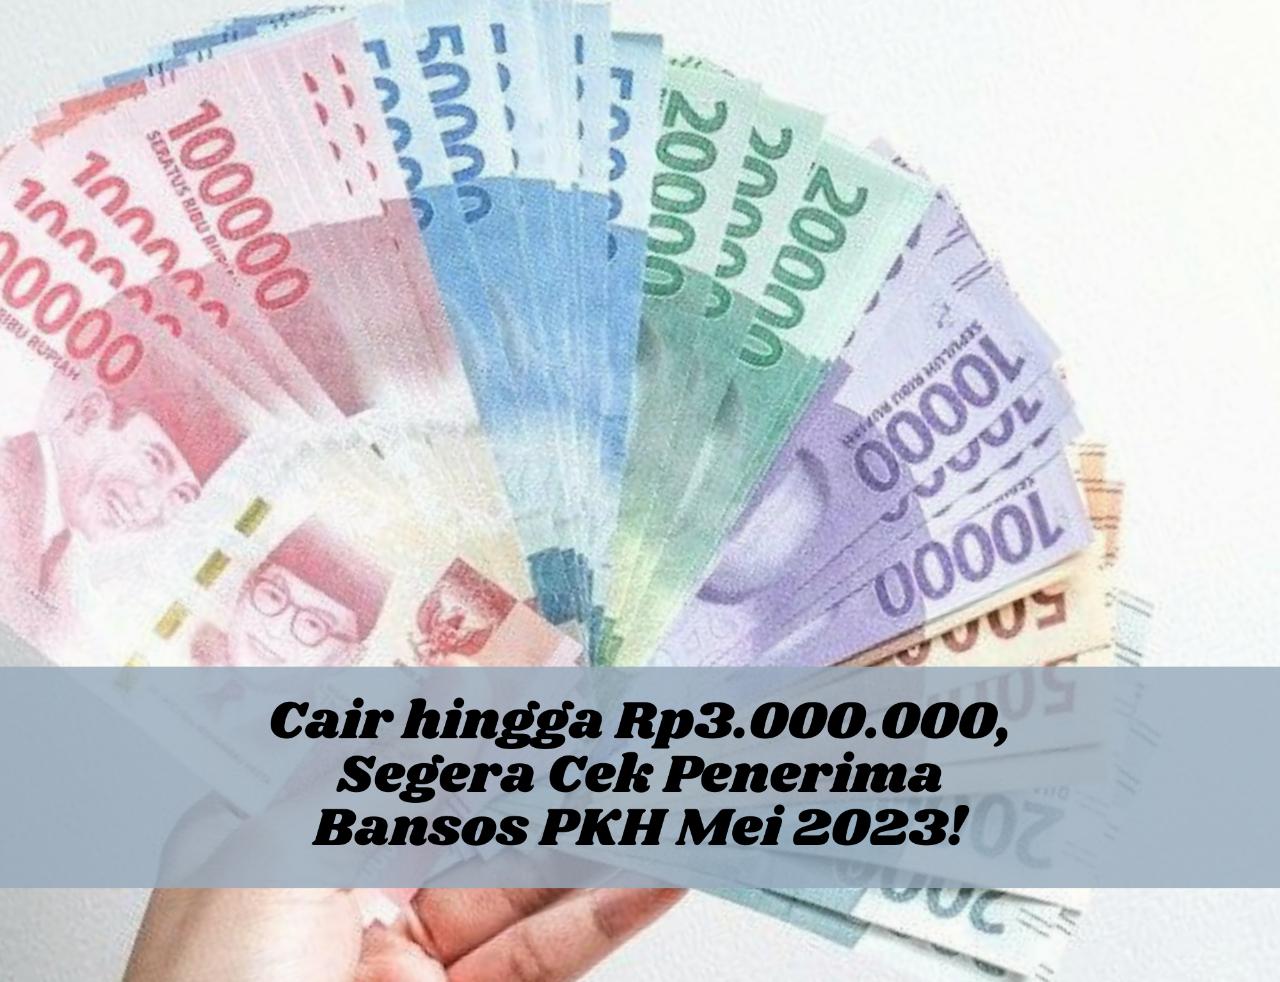 Cair hingga Rp3.000.000, Cek Segera Penerima Bansos PKH Mei 2023!